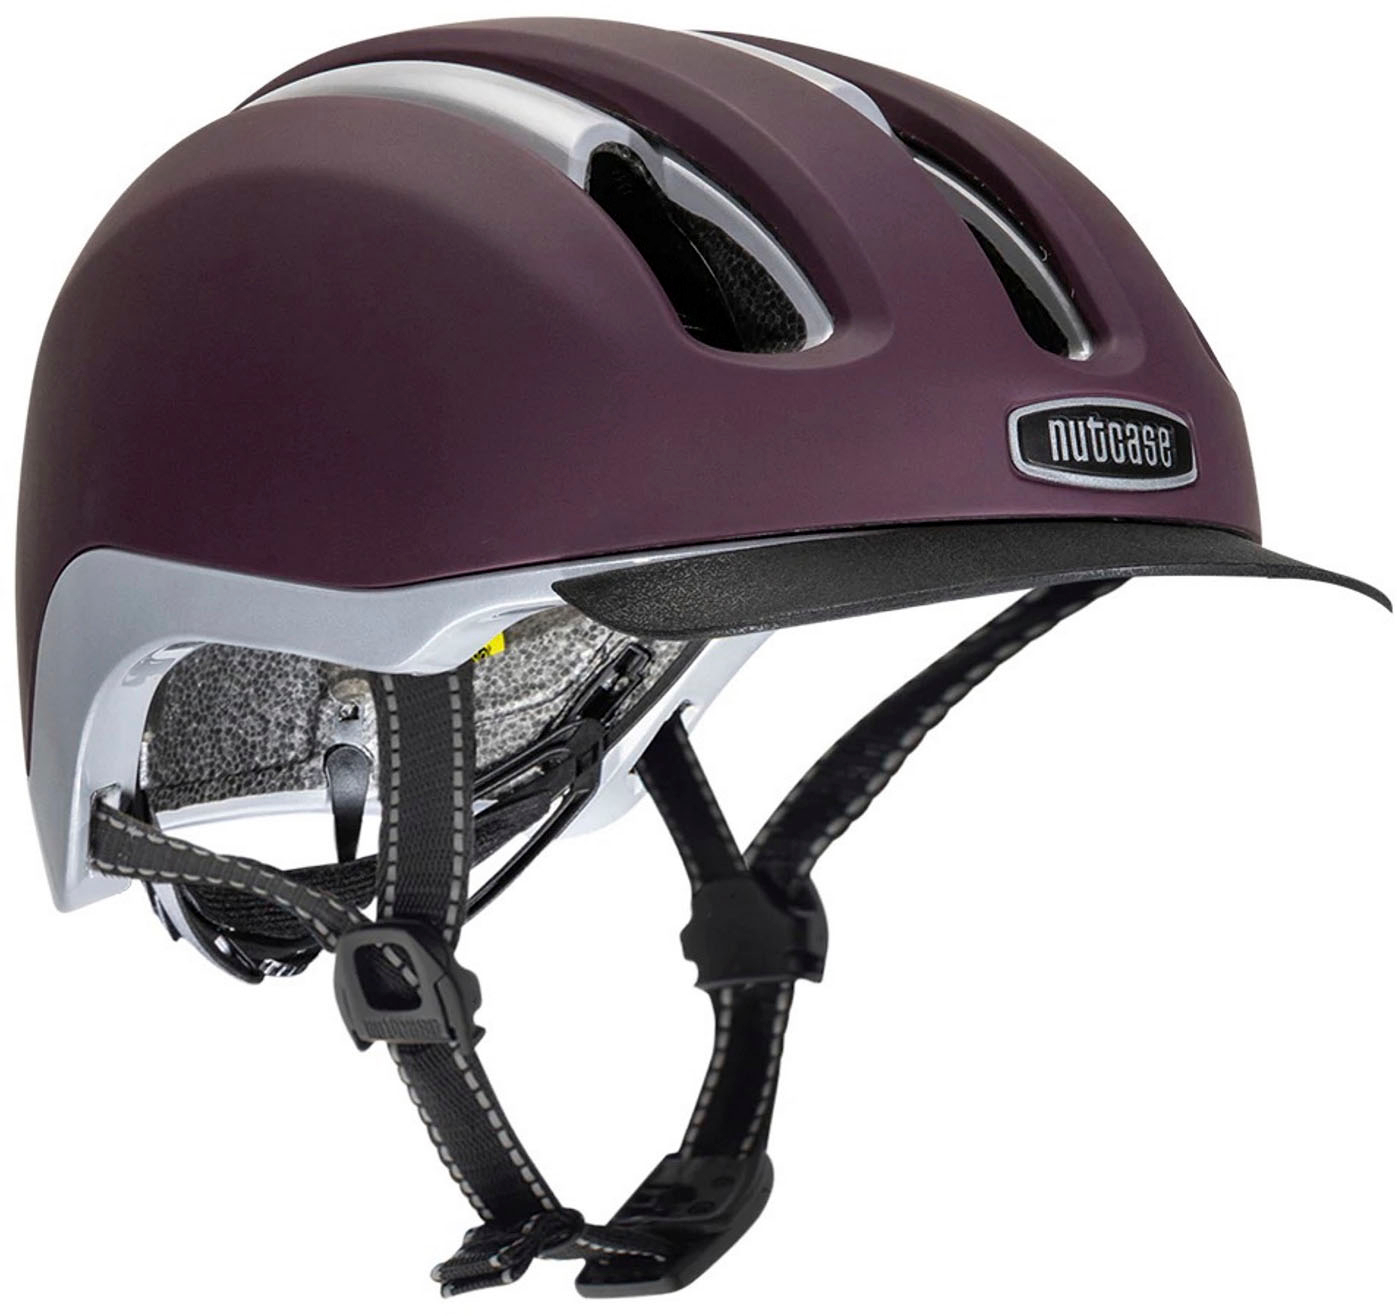 

Nutcase - Vio Adventure Helmet with MIPS - Plum